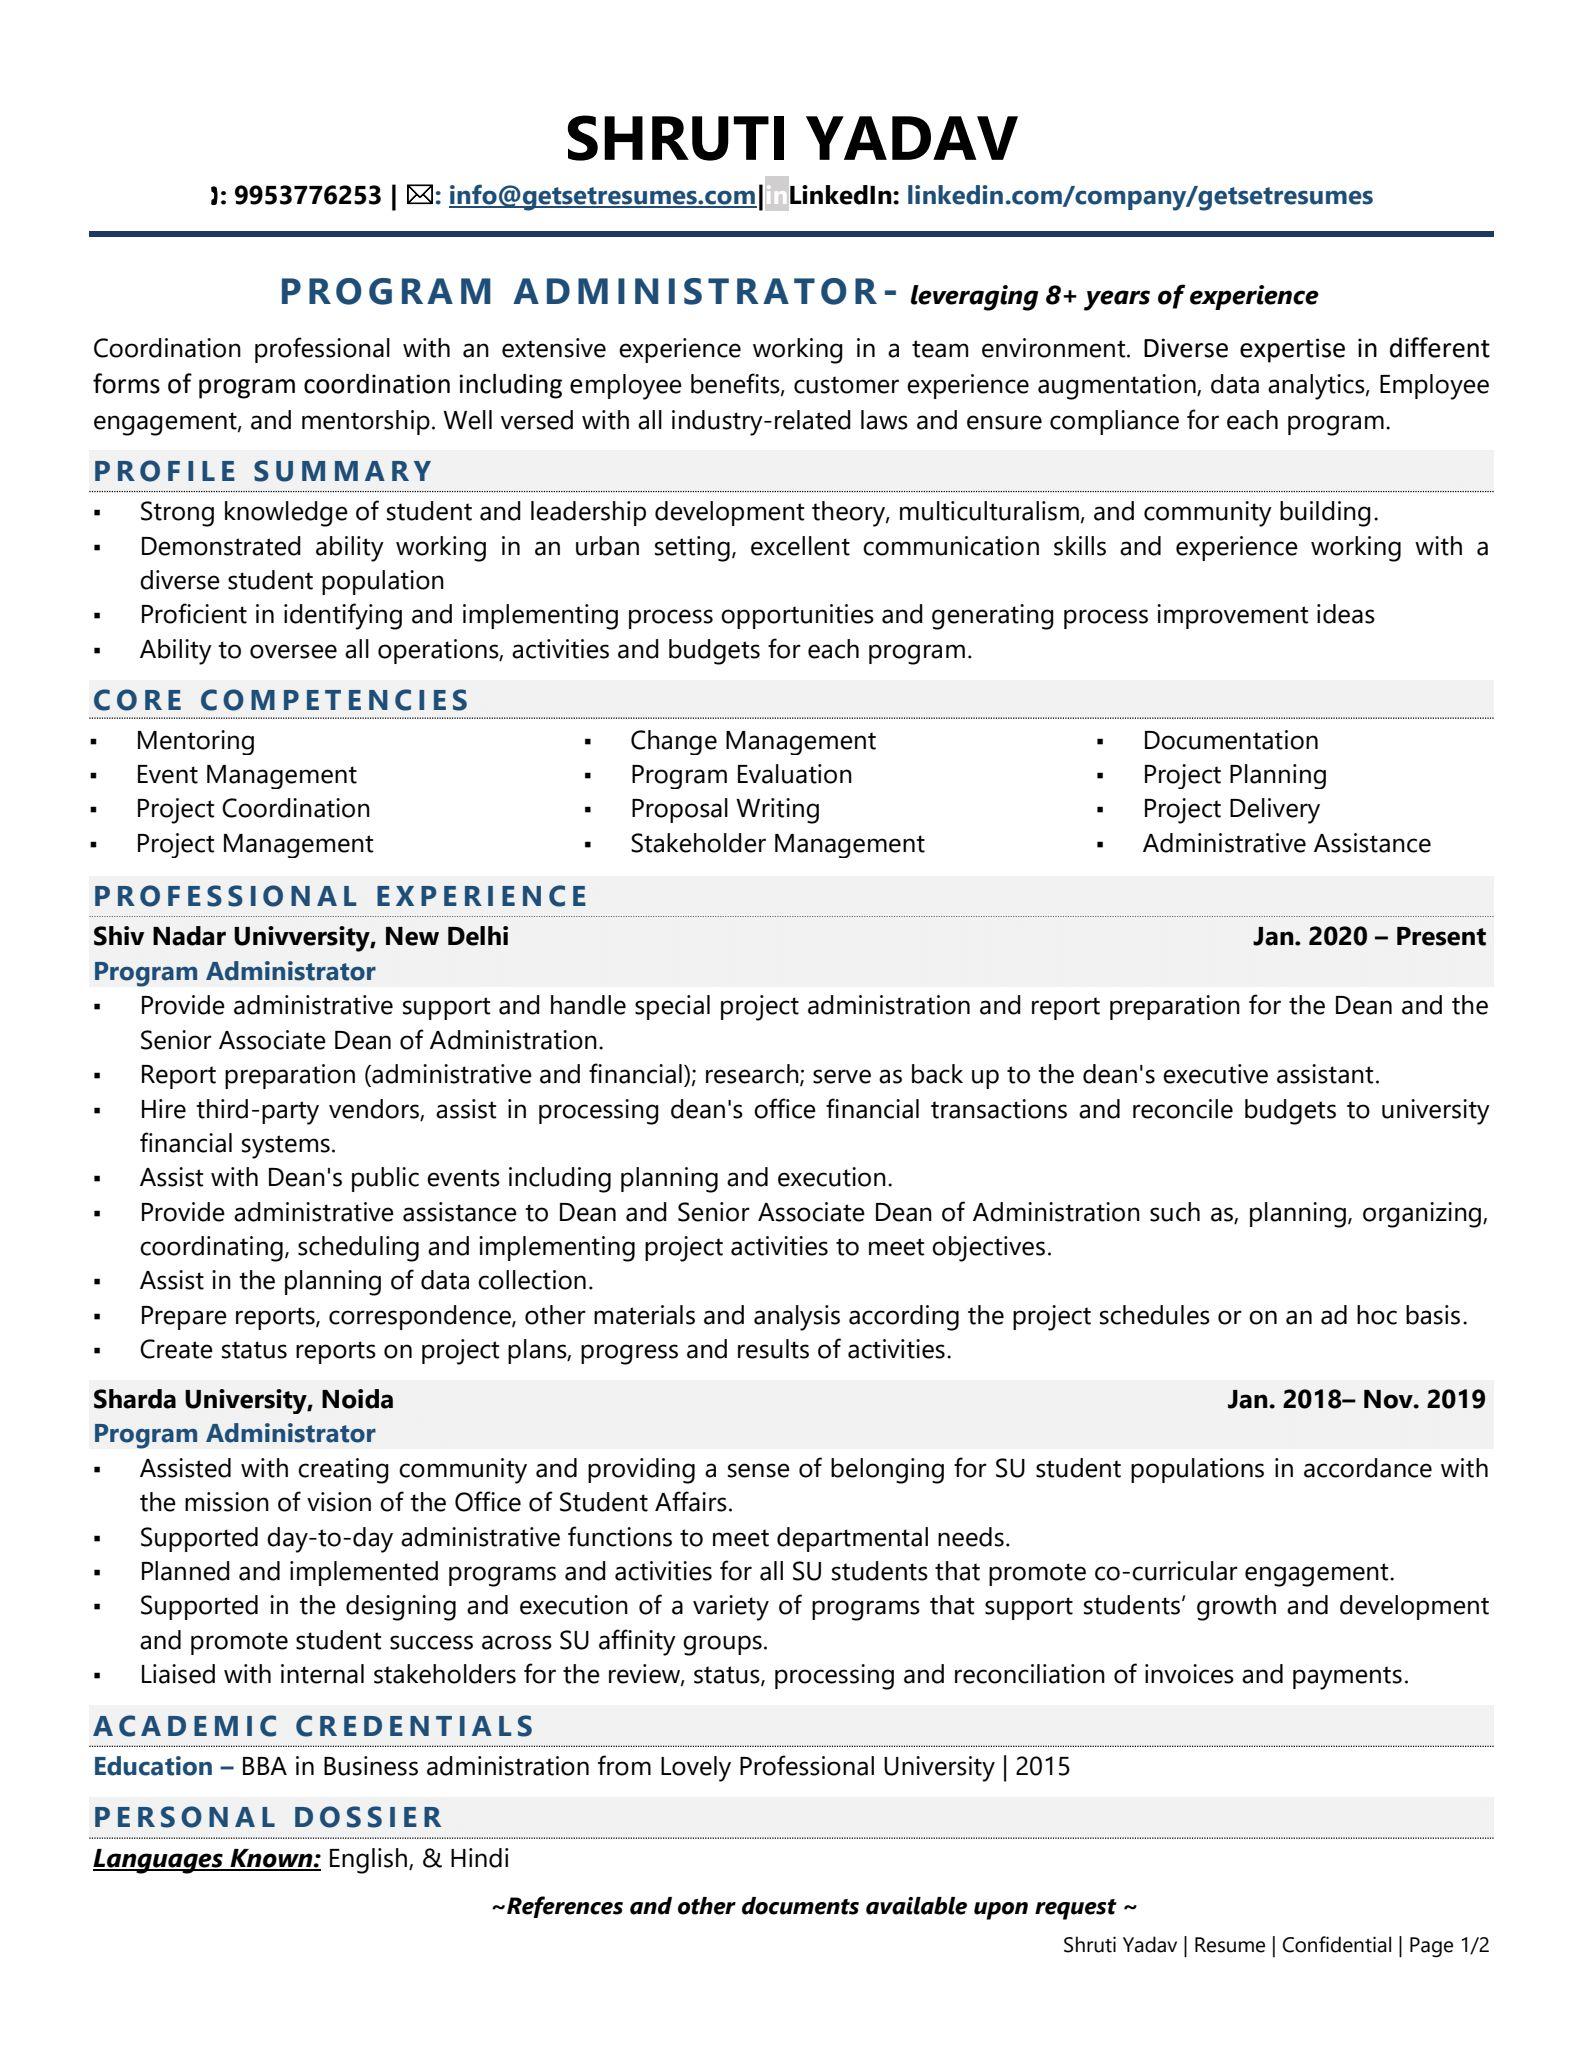 Program Administrator - Resume Example & Template